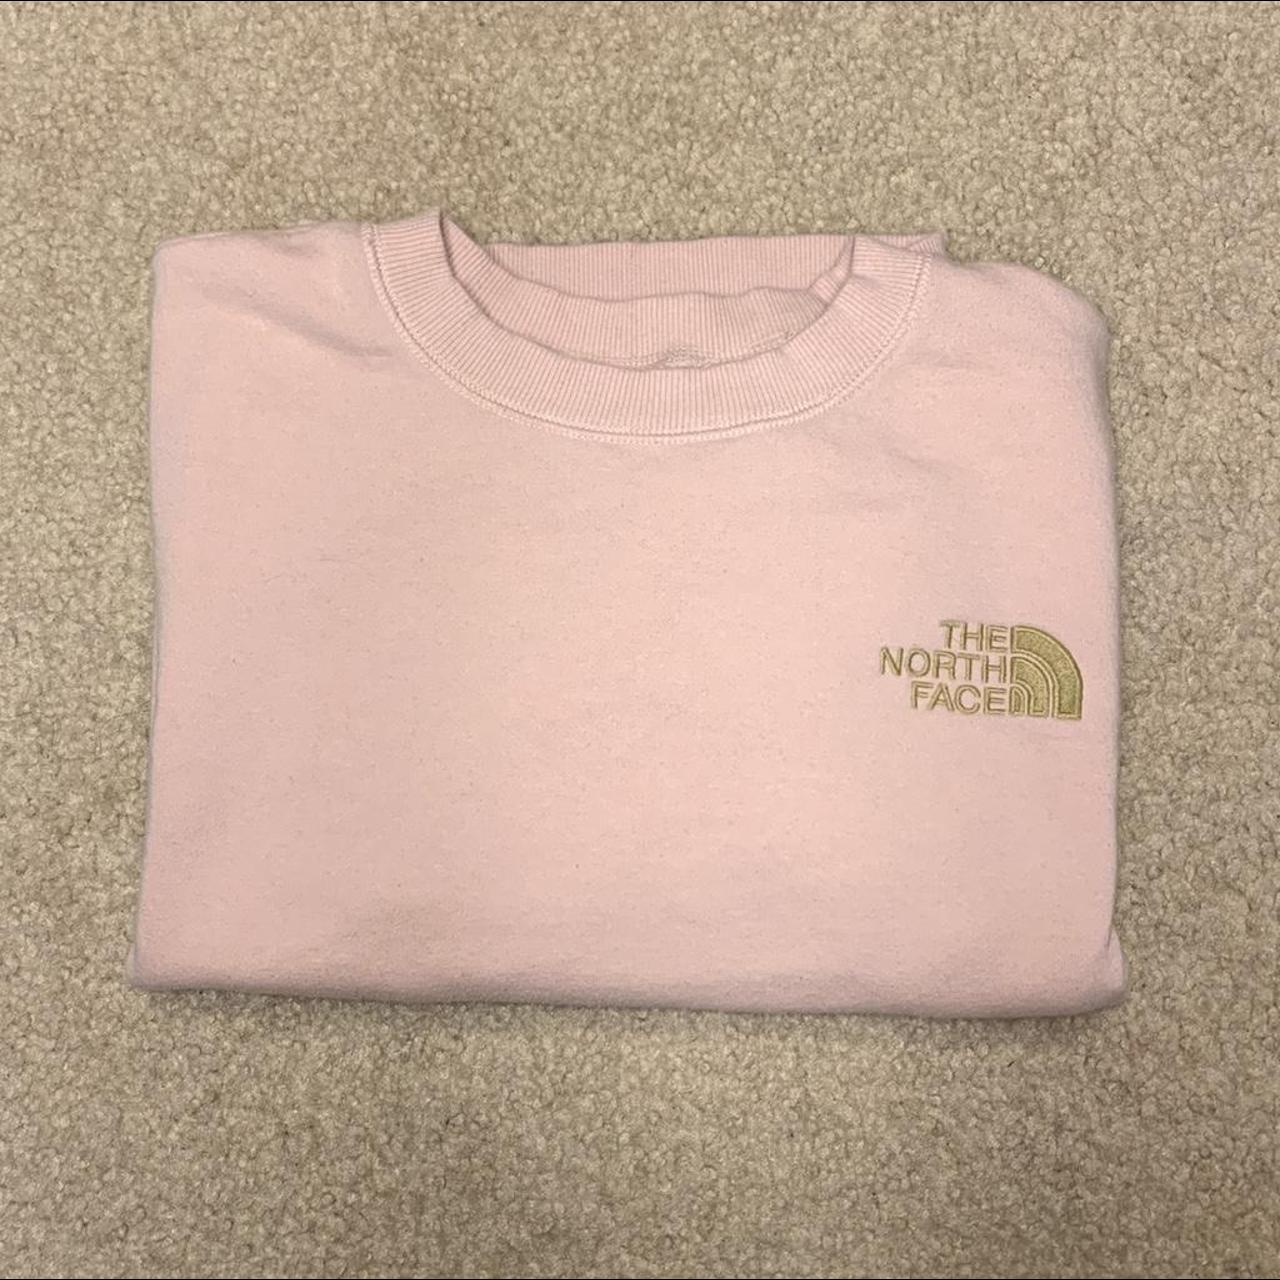 The North Face Women's Pink Sweatshirt (4)